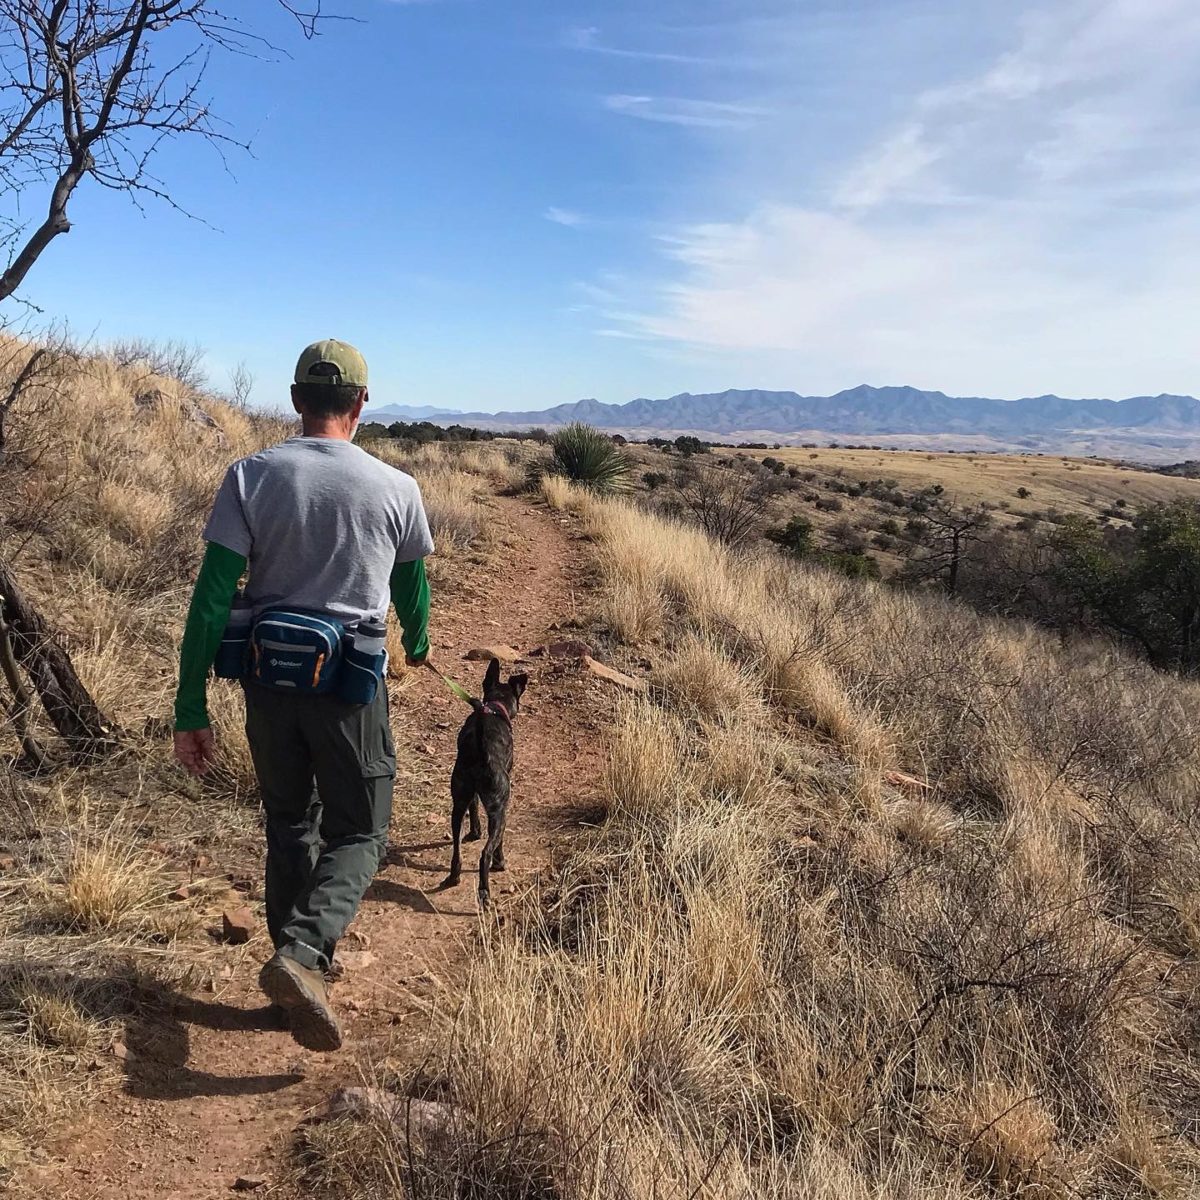 Man and dog hiking on a trail in Arizona